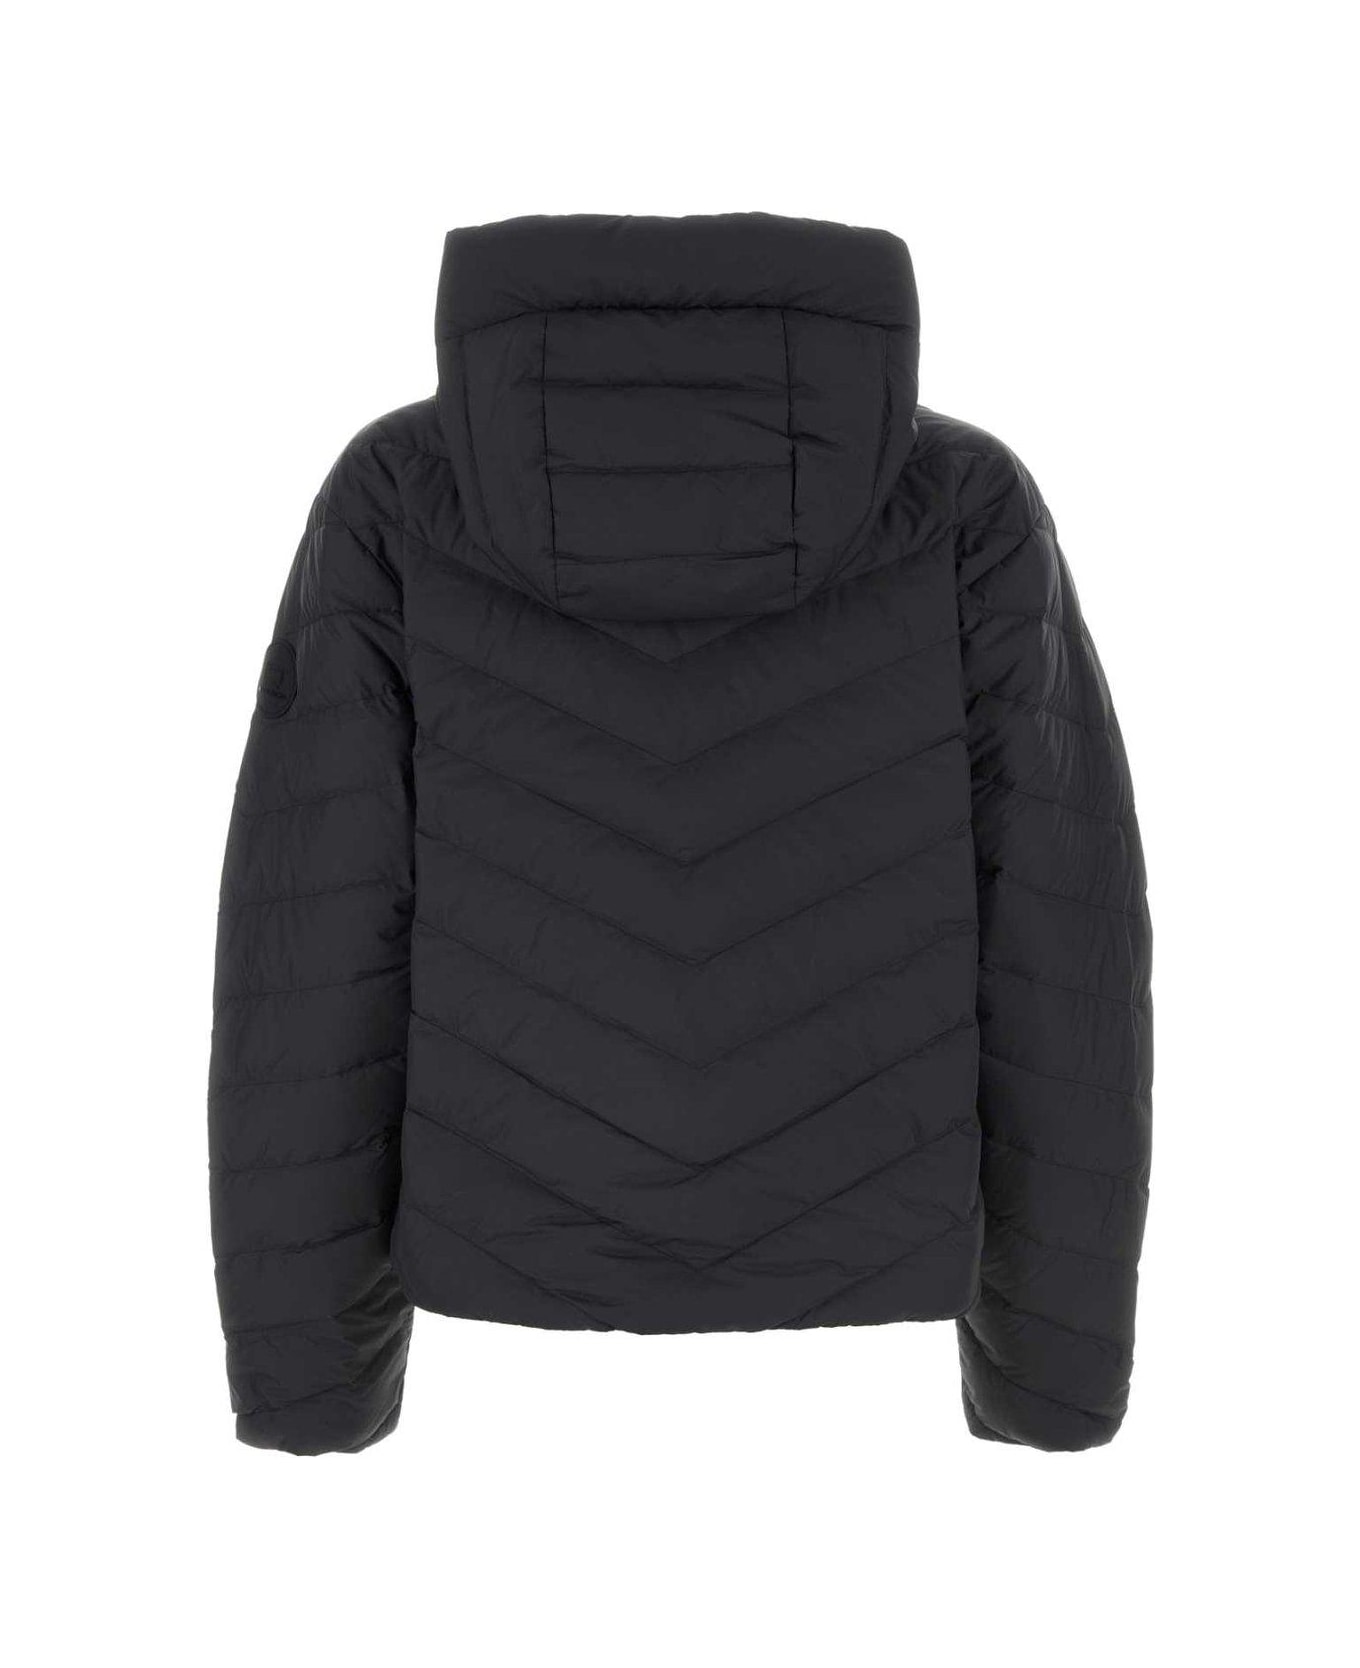 Woolrich Zip-up Drawstring Jacket - Black